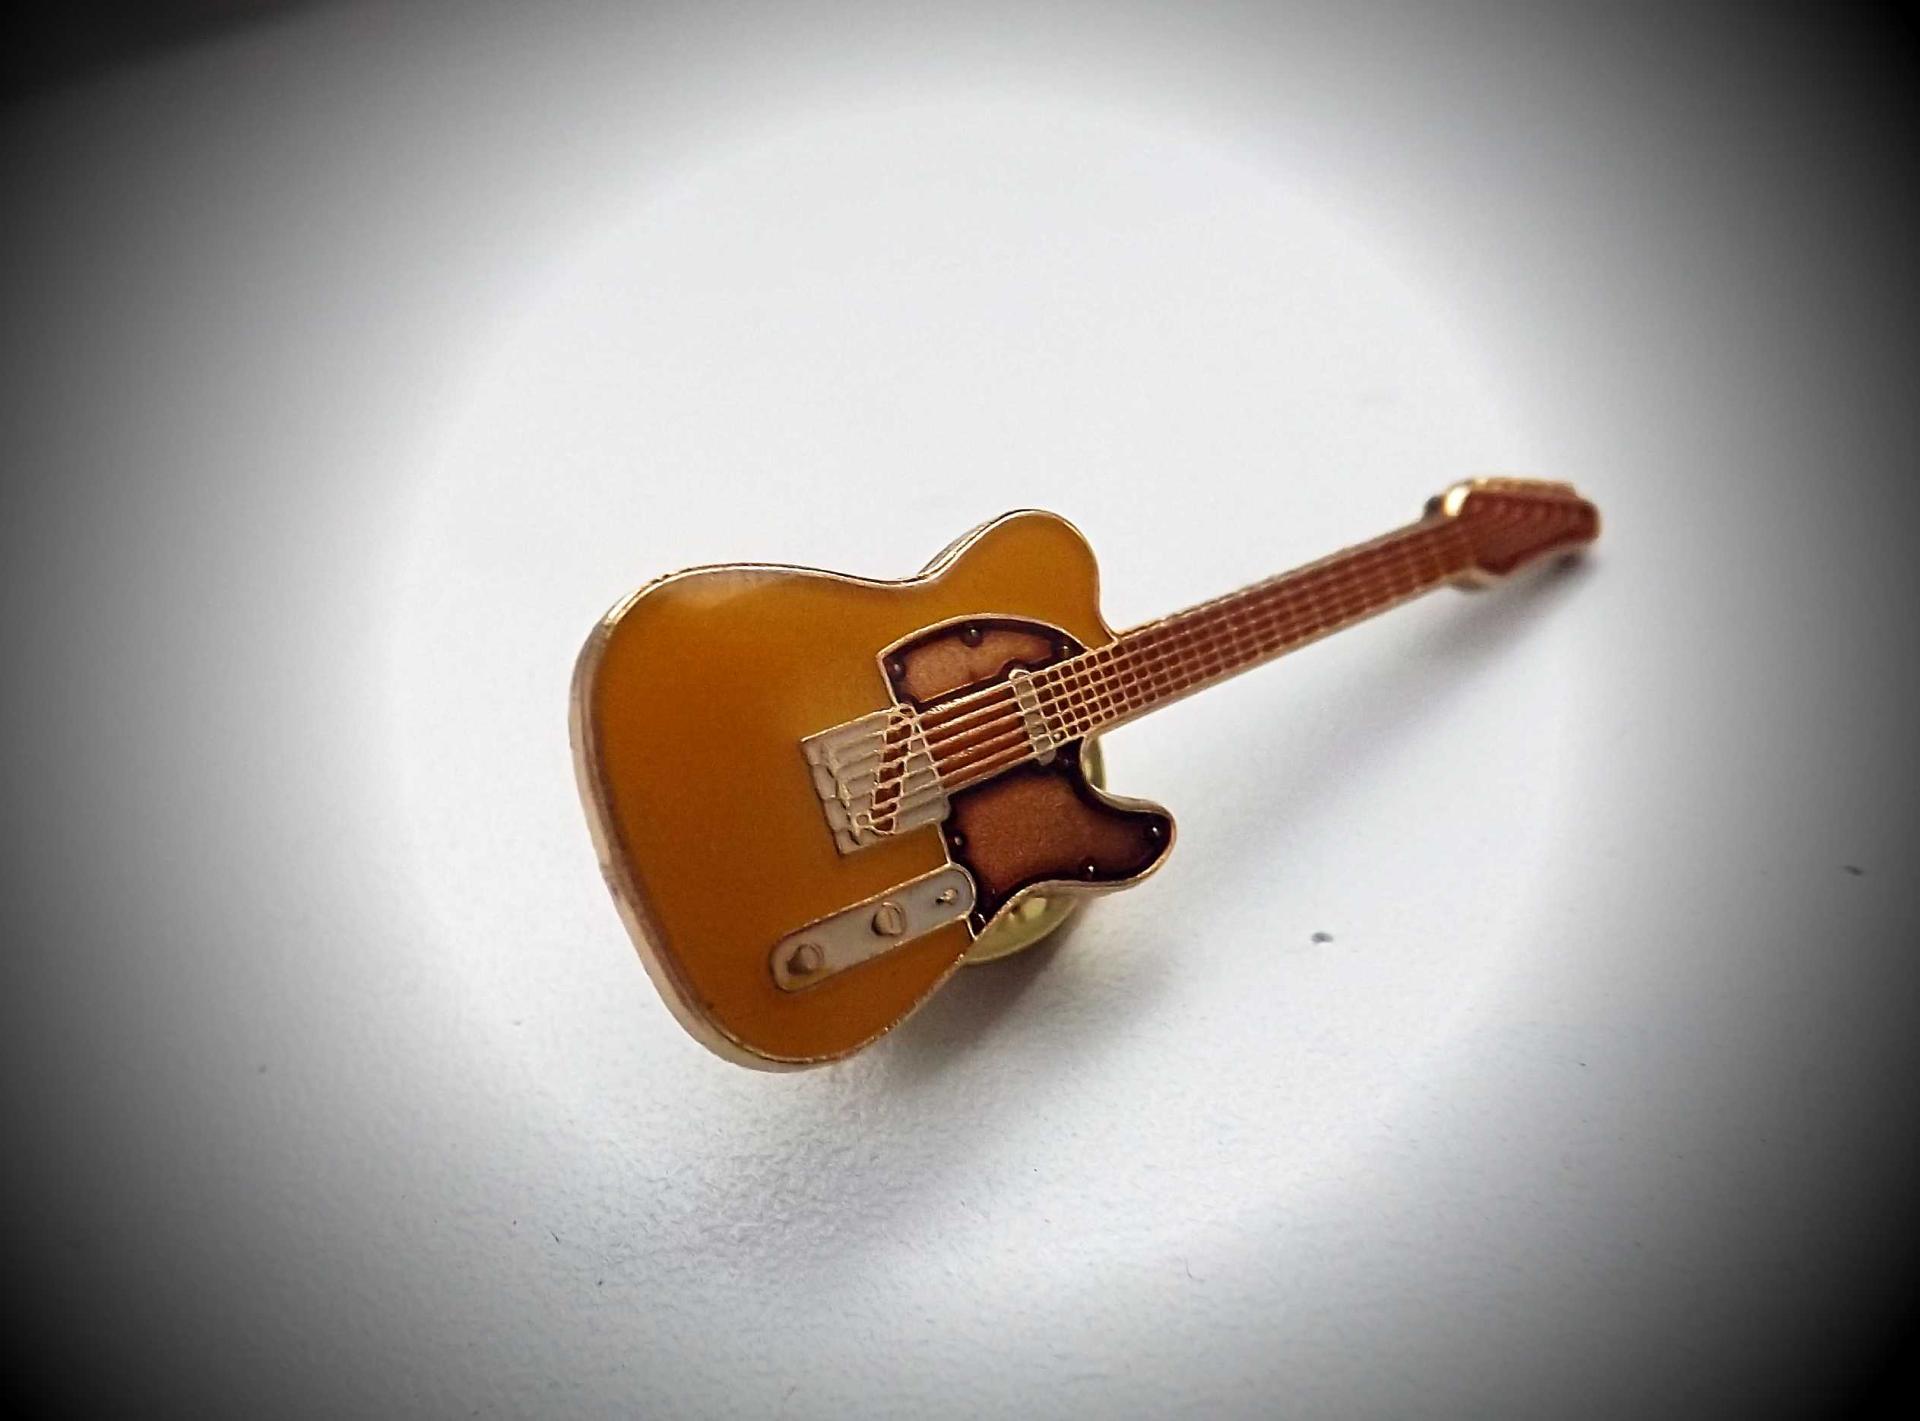 Fender Telecaster Guitar Pin - White or Yellow